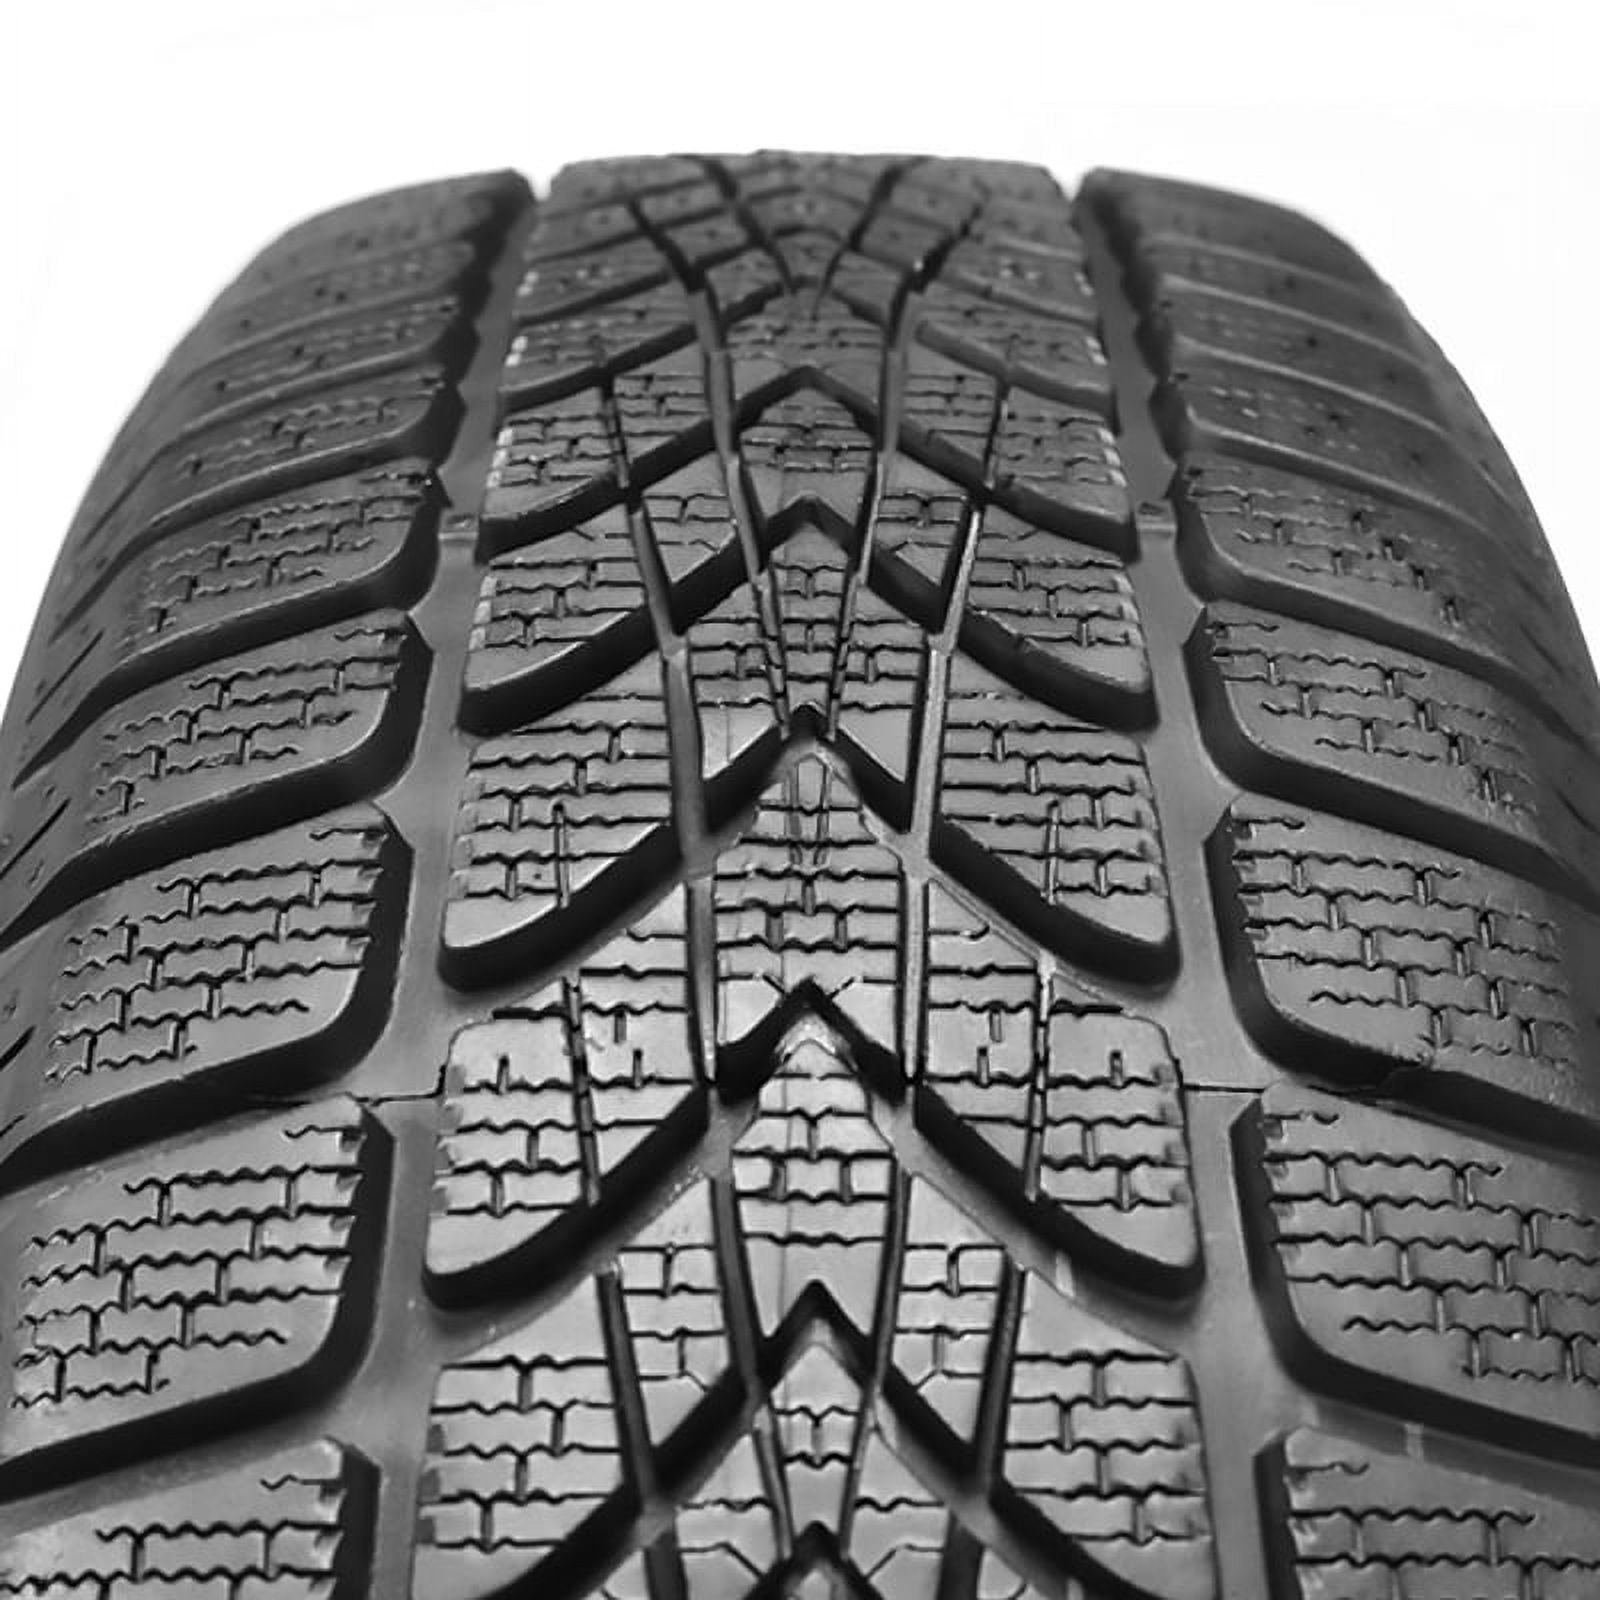 Dunlop sp Cruze LT, Fits: bsw winter Cruze 2012-15 Limited LT P225/50R17 Chevrolet 2016 winter 4d Chevrolet sport 98H tire